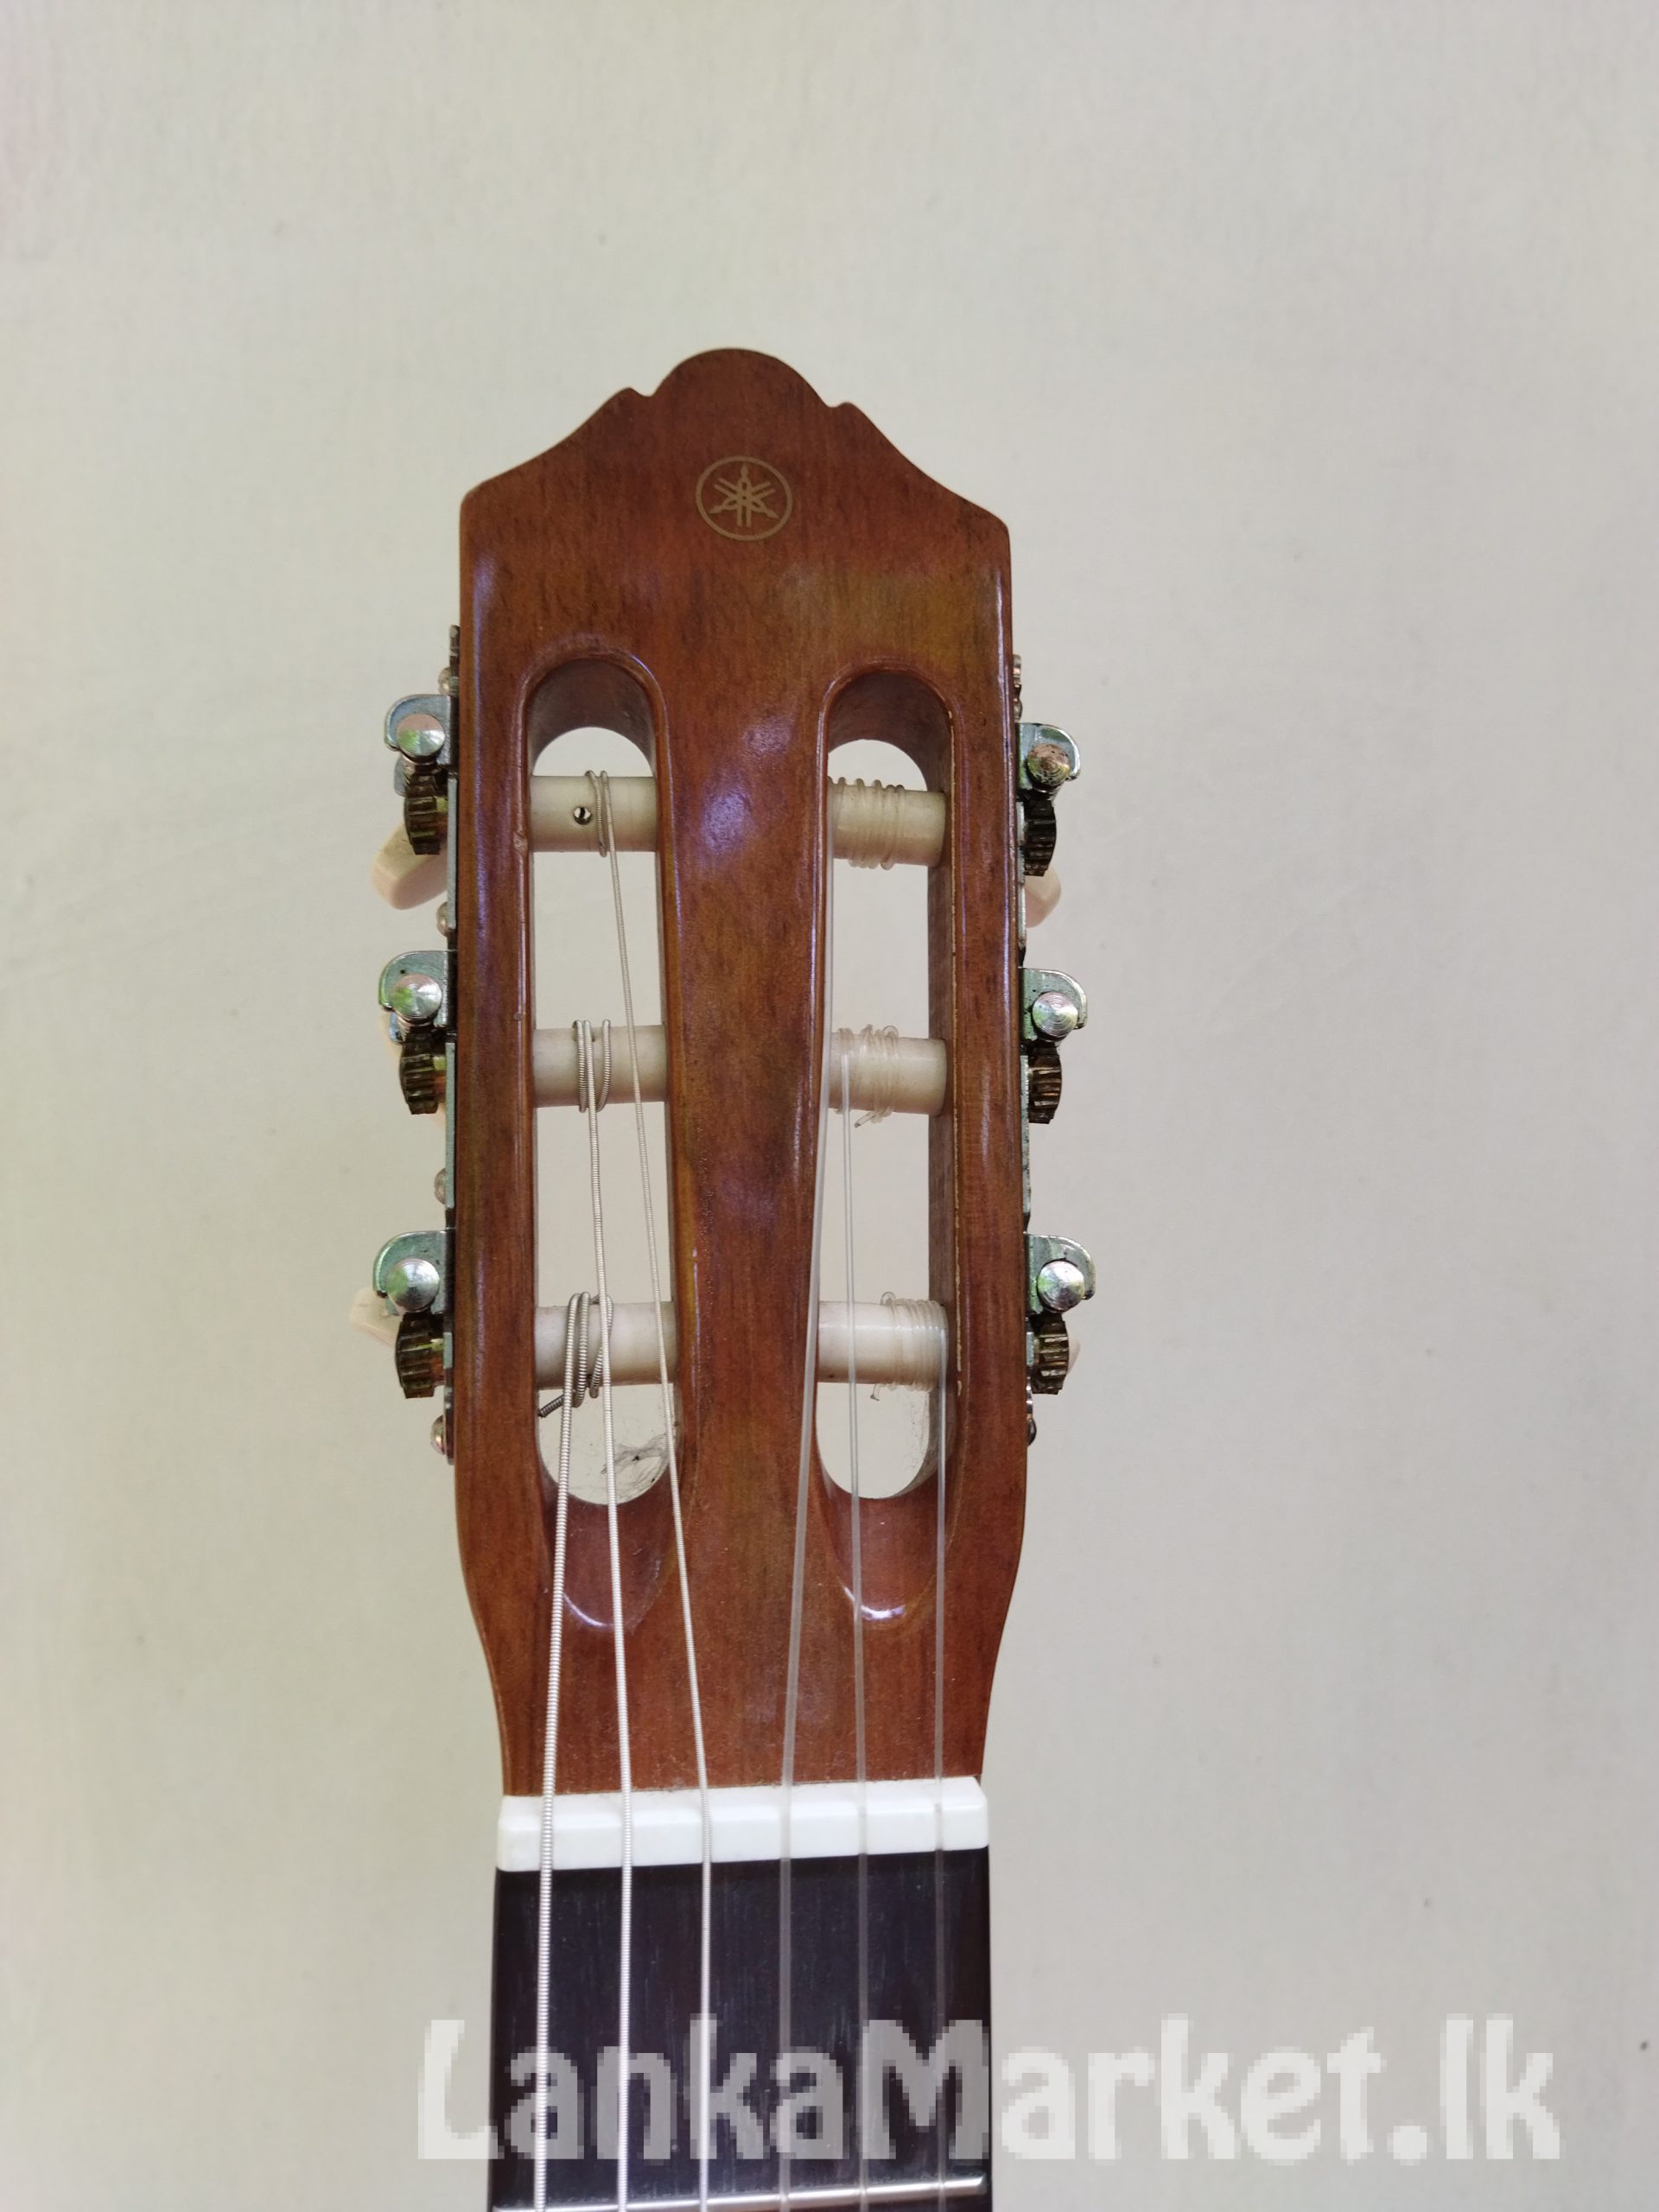 Original YAMAHA C40 Classical Guitar (used) Good condition..